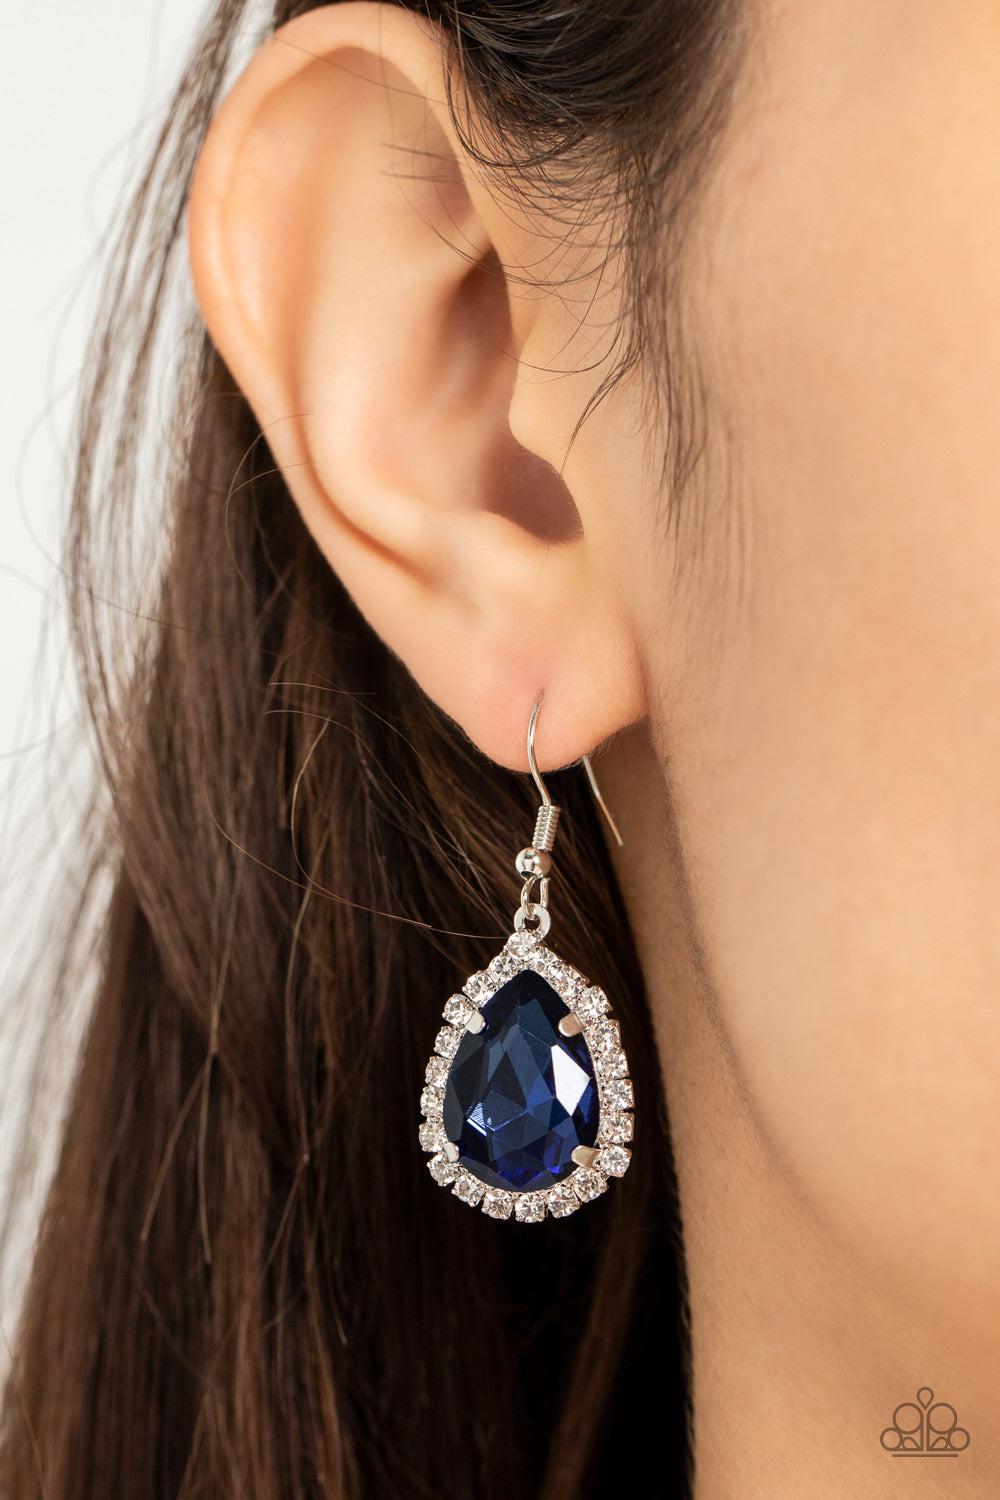 Bippity Boppity BOOM! Blue Rhinestone Earrings - Paparazzi Accessories- lightbox - CarasShop.com - $5 Jewelry by Cara Jewels